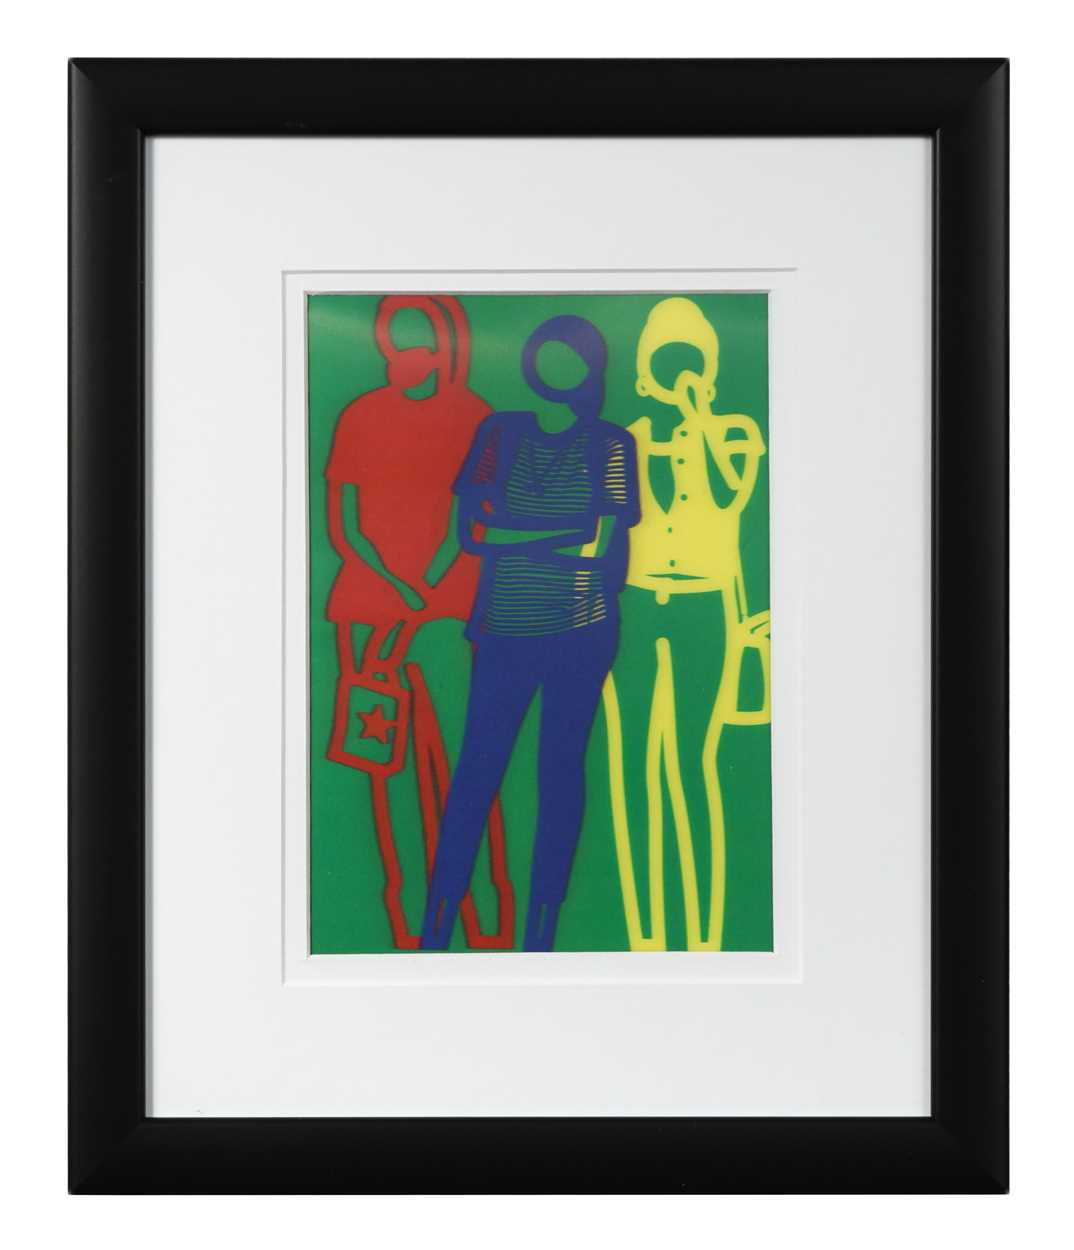 Julian Opie (1958-), Krobath, 3D Lenticular Moving Image, In Vibrant Colour, Framed, 2019 - Image 3 of 6